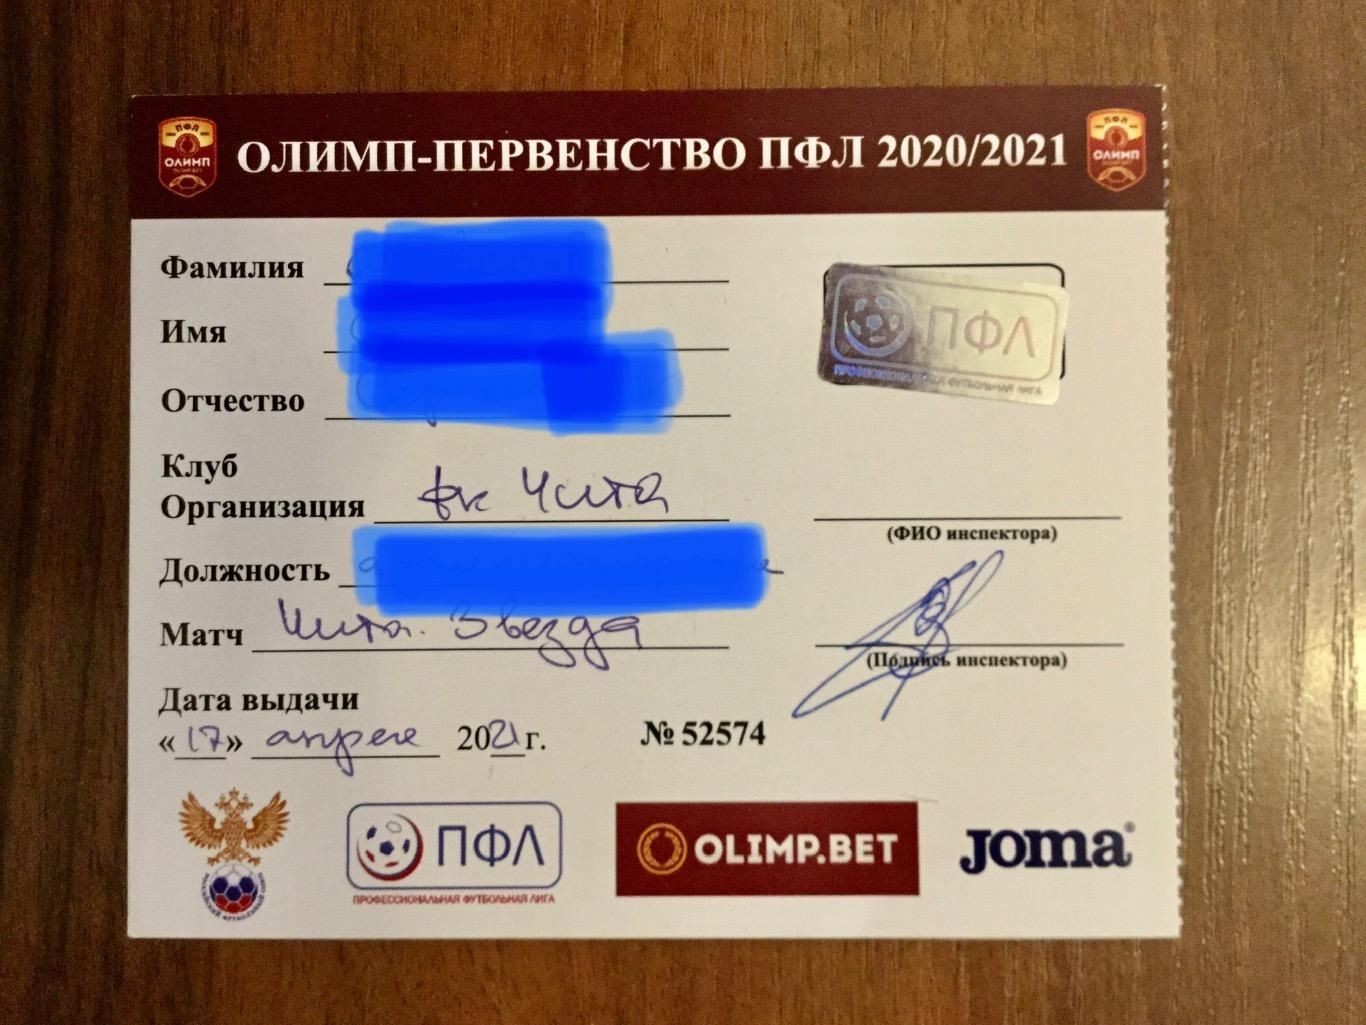 ФК Чита - Звезда (С-Петербург) - 2020/2021 (17 апреля) аккредитация БЕЗ контроля